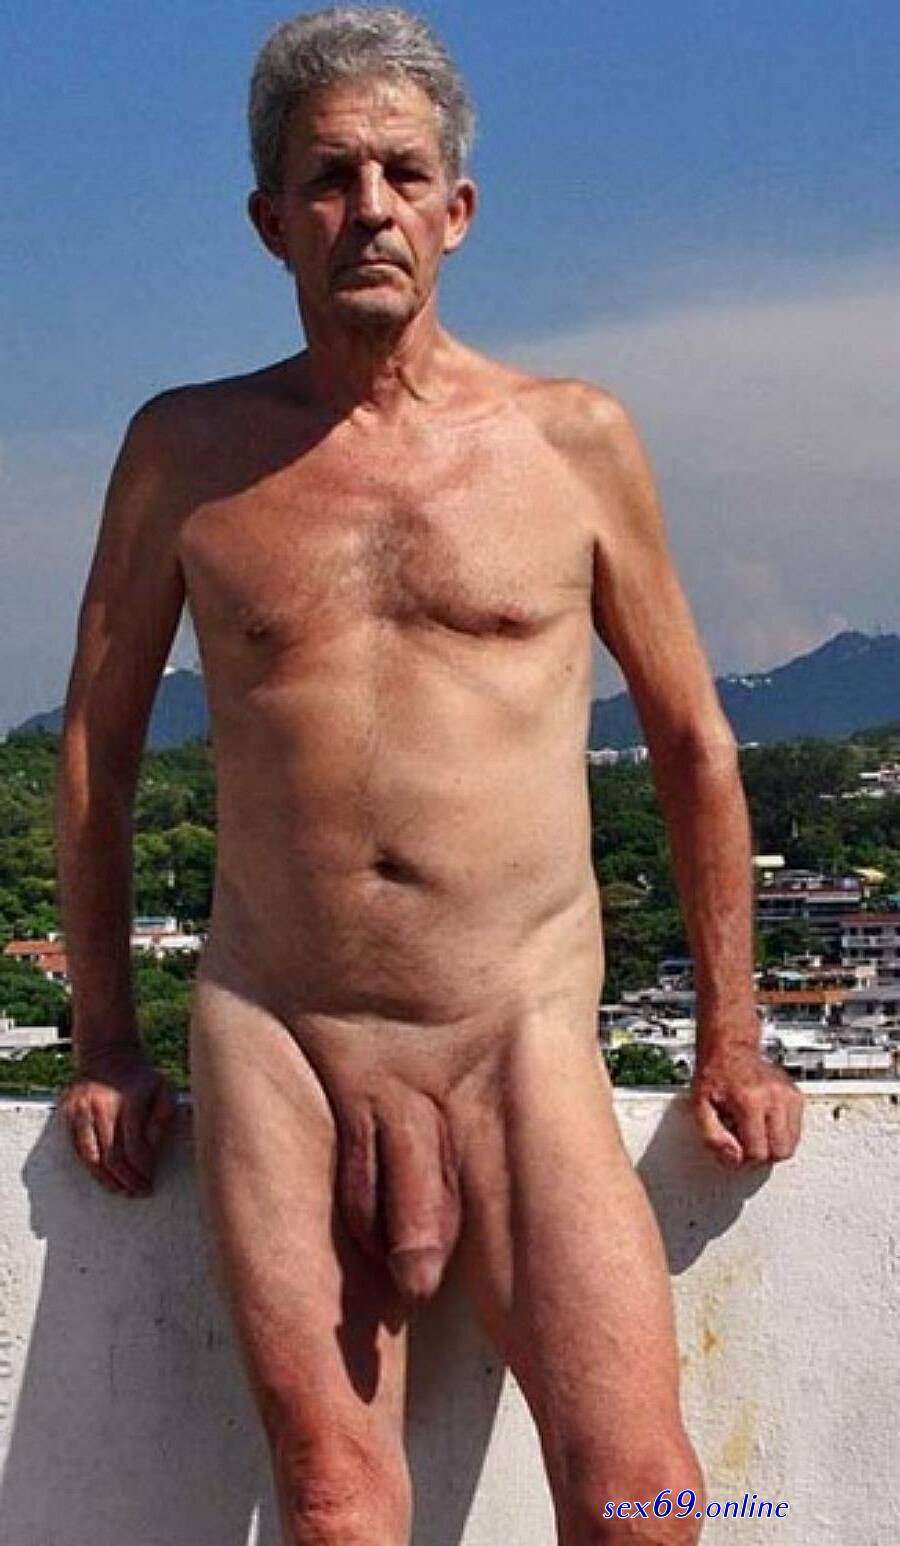 Big Dick Older Nudists Tumblr - old men huge cock pics - Sexy photos